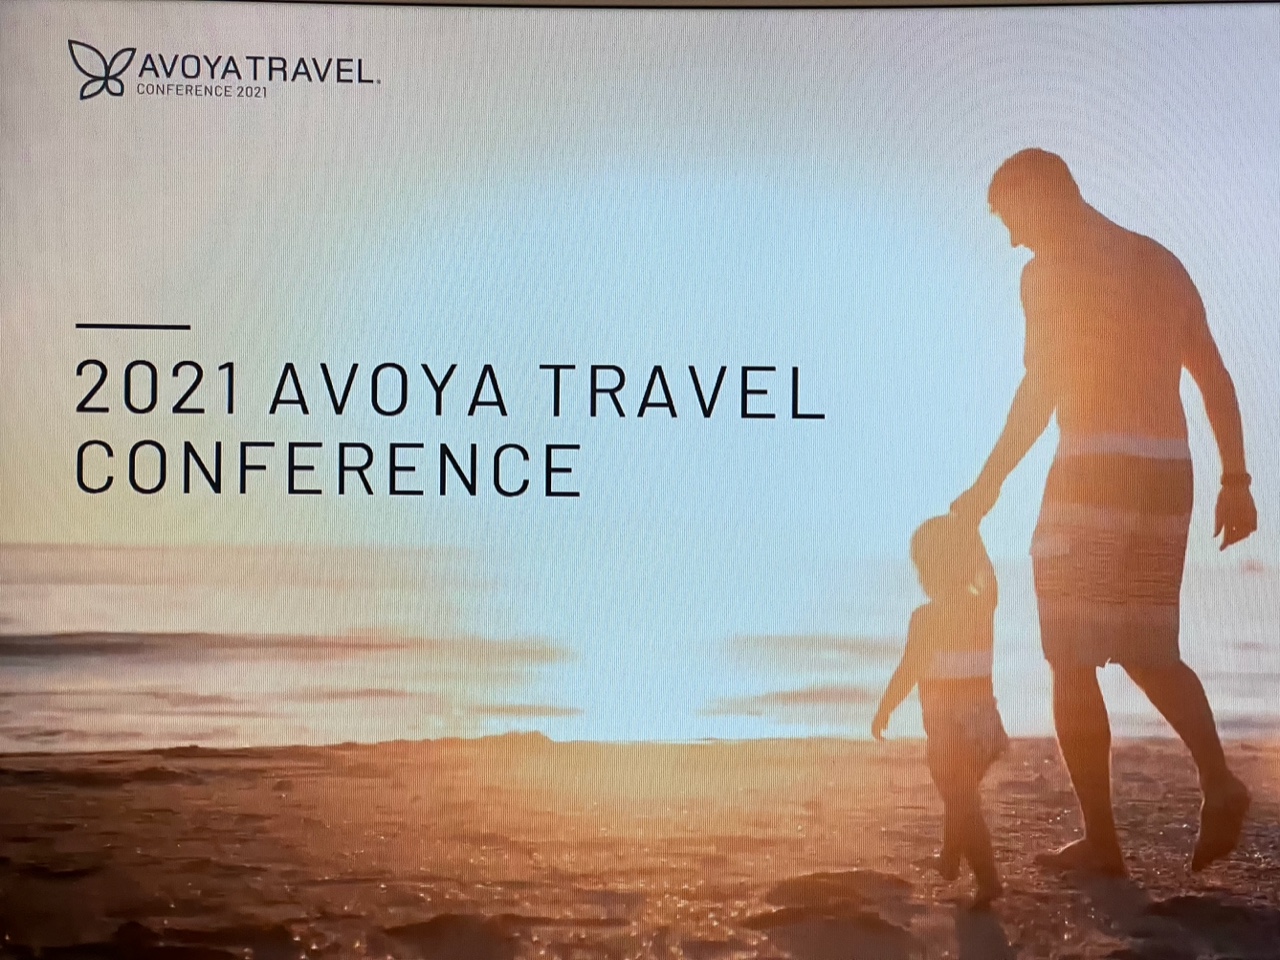 avoya travel indeed